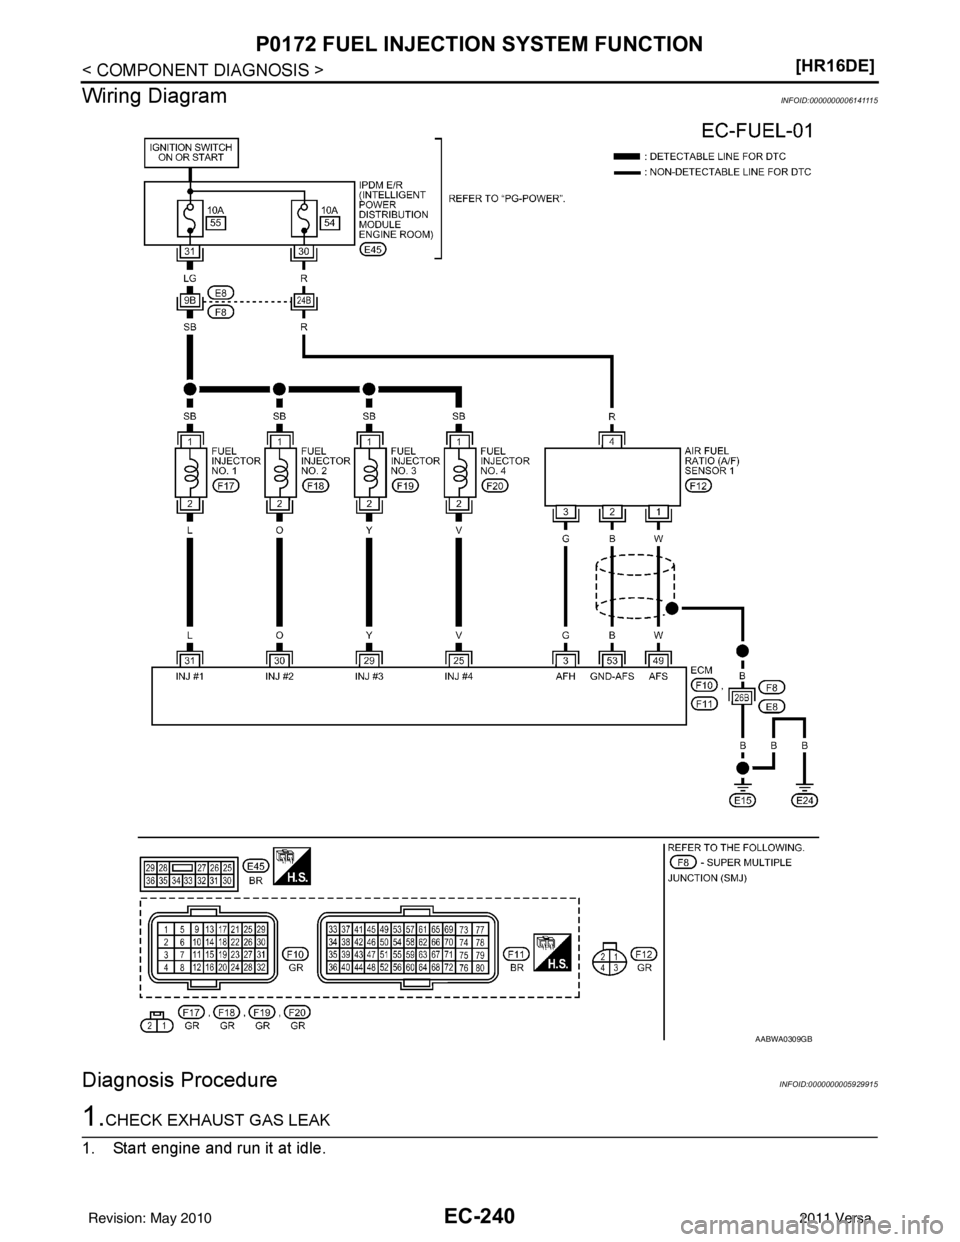 NISSAN LATIO 2011  Service Repair Manual EC-240
< COMPONENT DIAGNOSIS >[HR16DE]
P0172 FUEL INJECTION SYSTEM FUNCTION
Wiring Diagram
INFOID:0000000006141115
Diagnosis ProcedureINFOID:0000000005929915
1.CHECK EXHAUST GAS LEAK
1. Start engine a